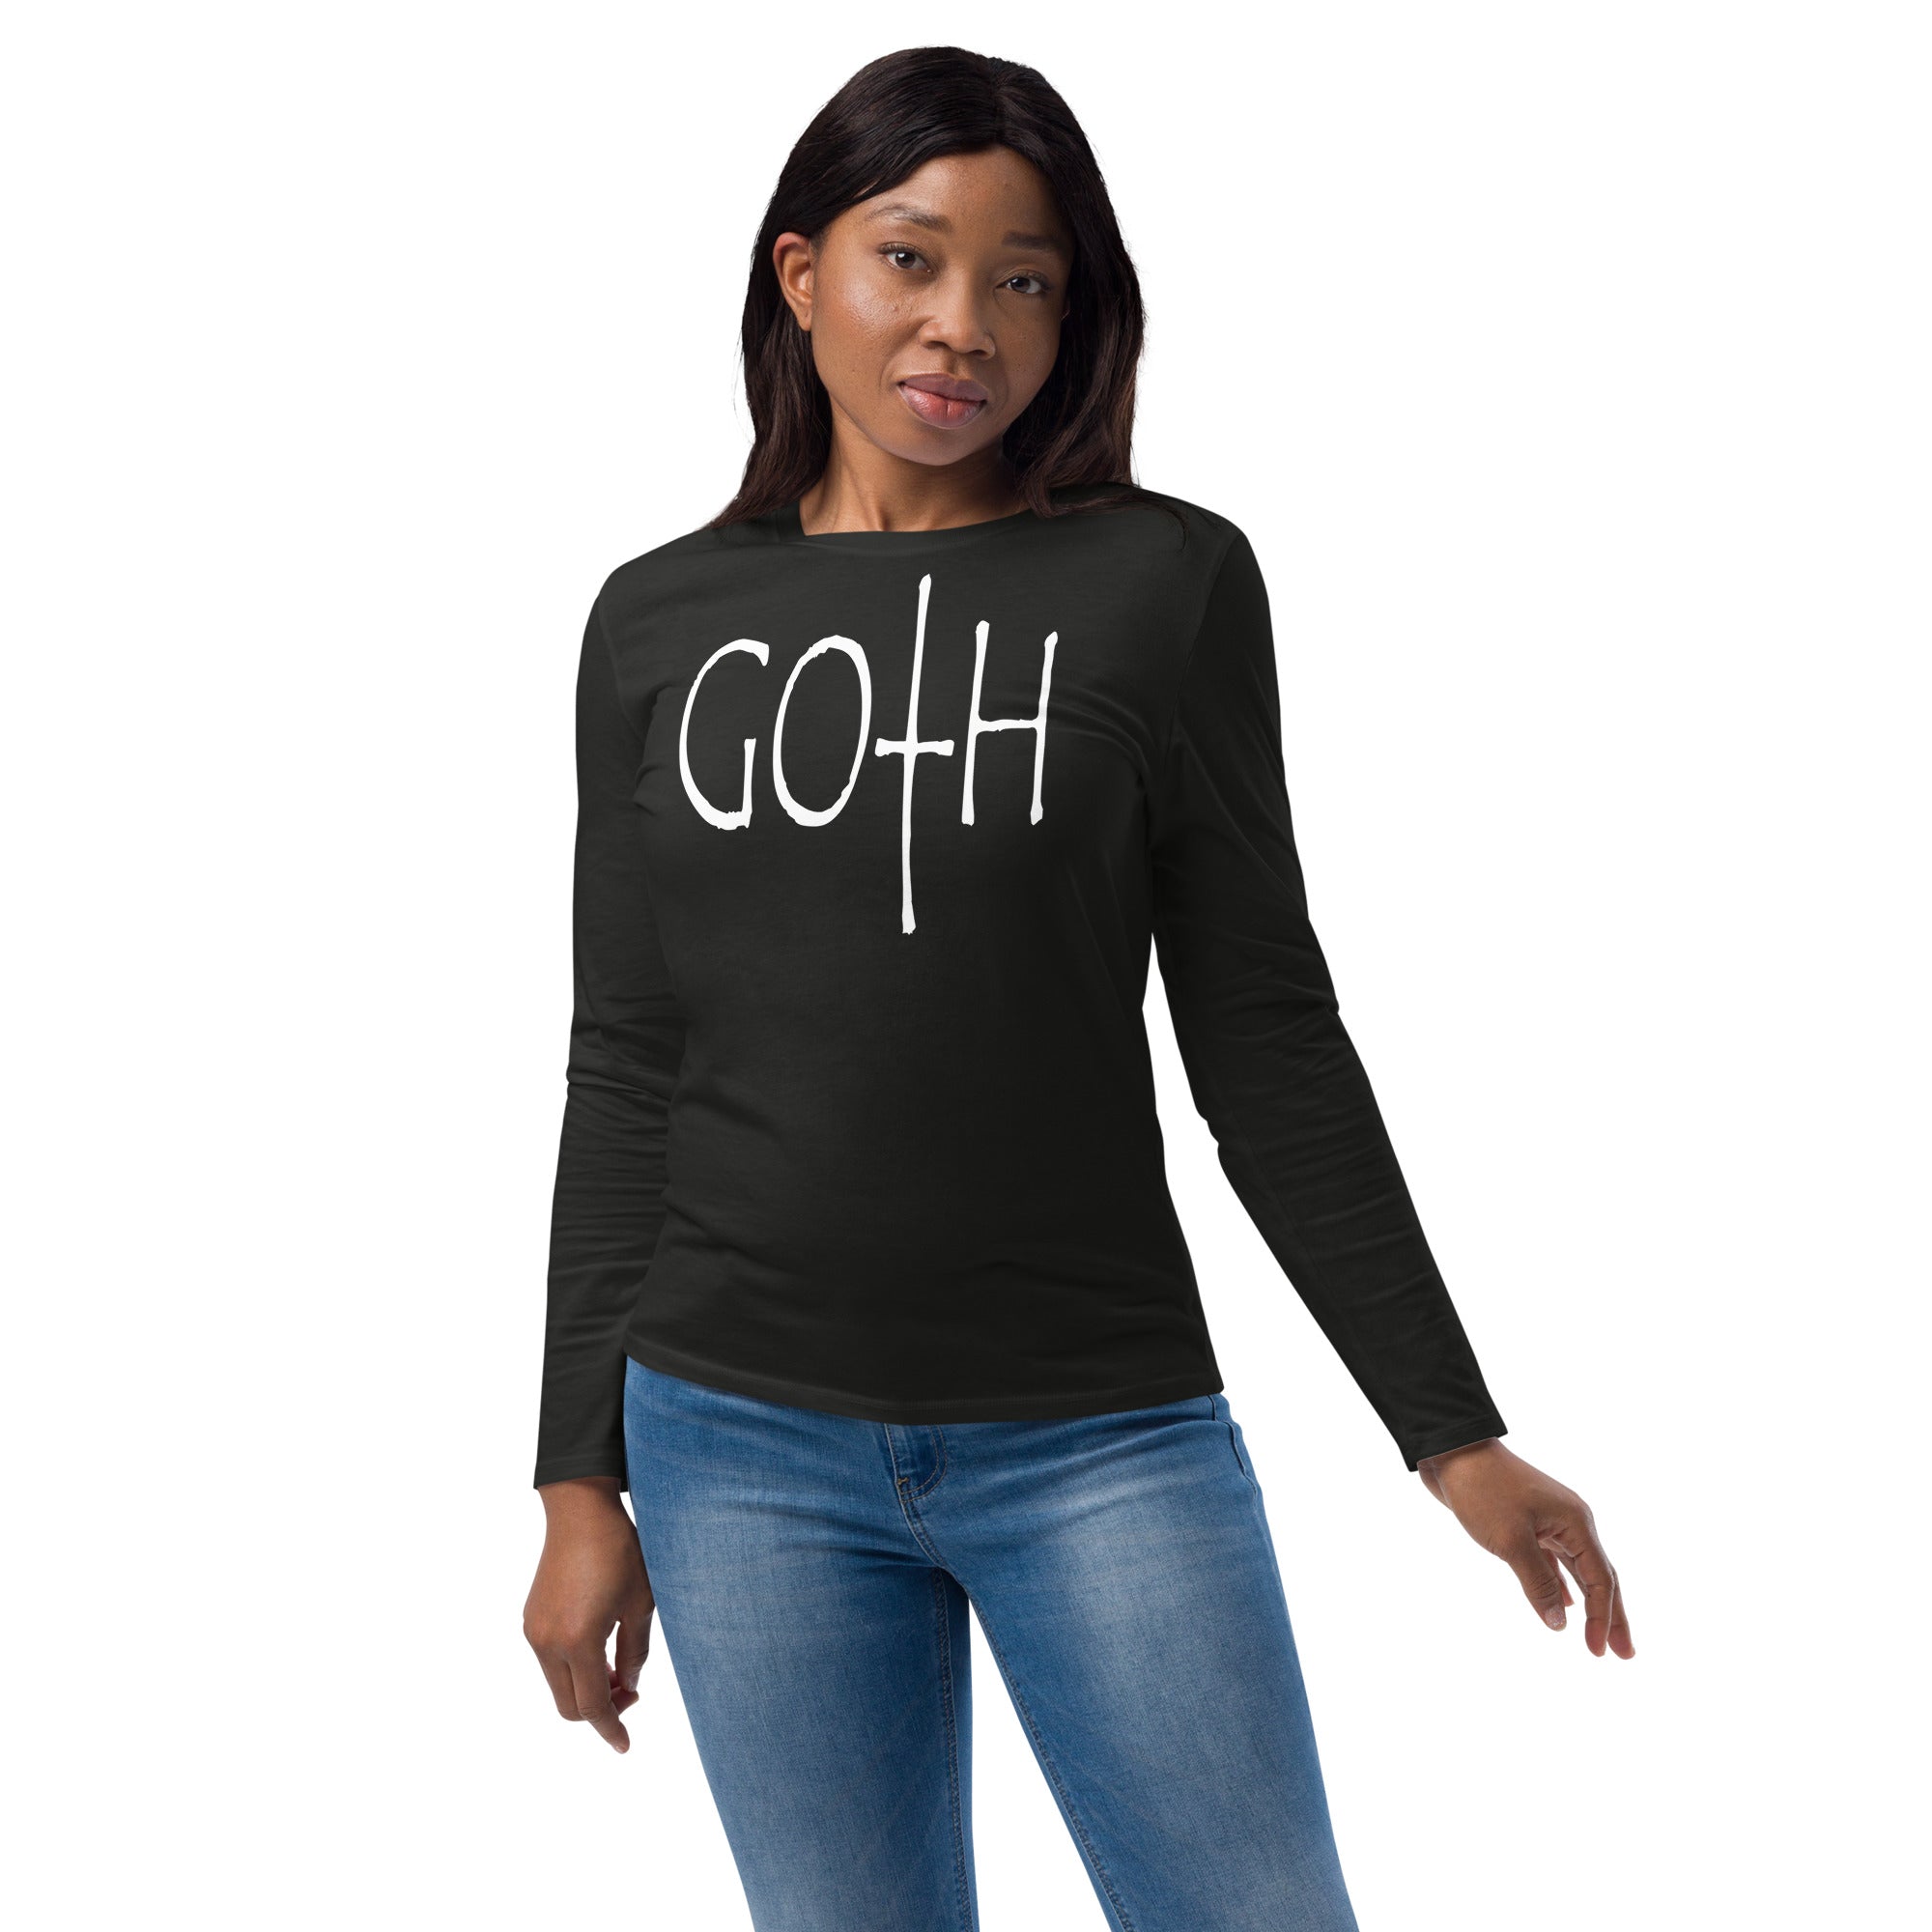 Goth Style Women's Fashion Long Sleeve Shirt - Edge of Life Designs